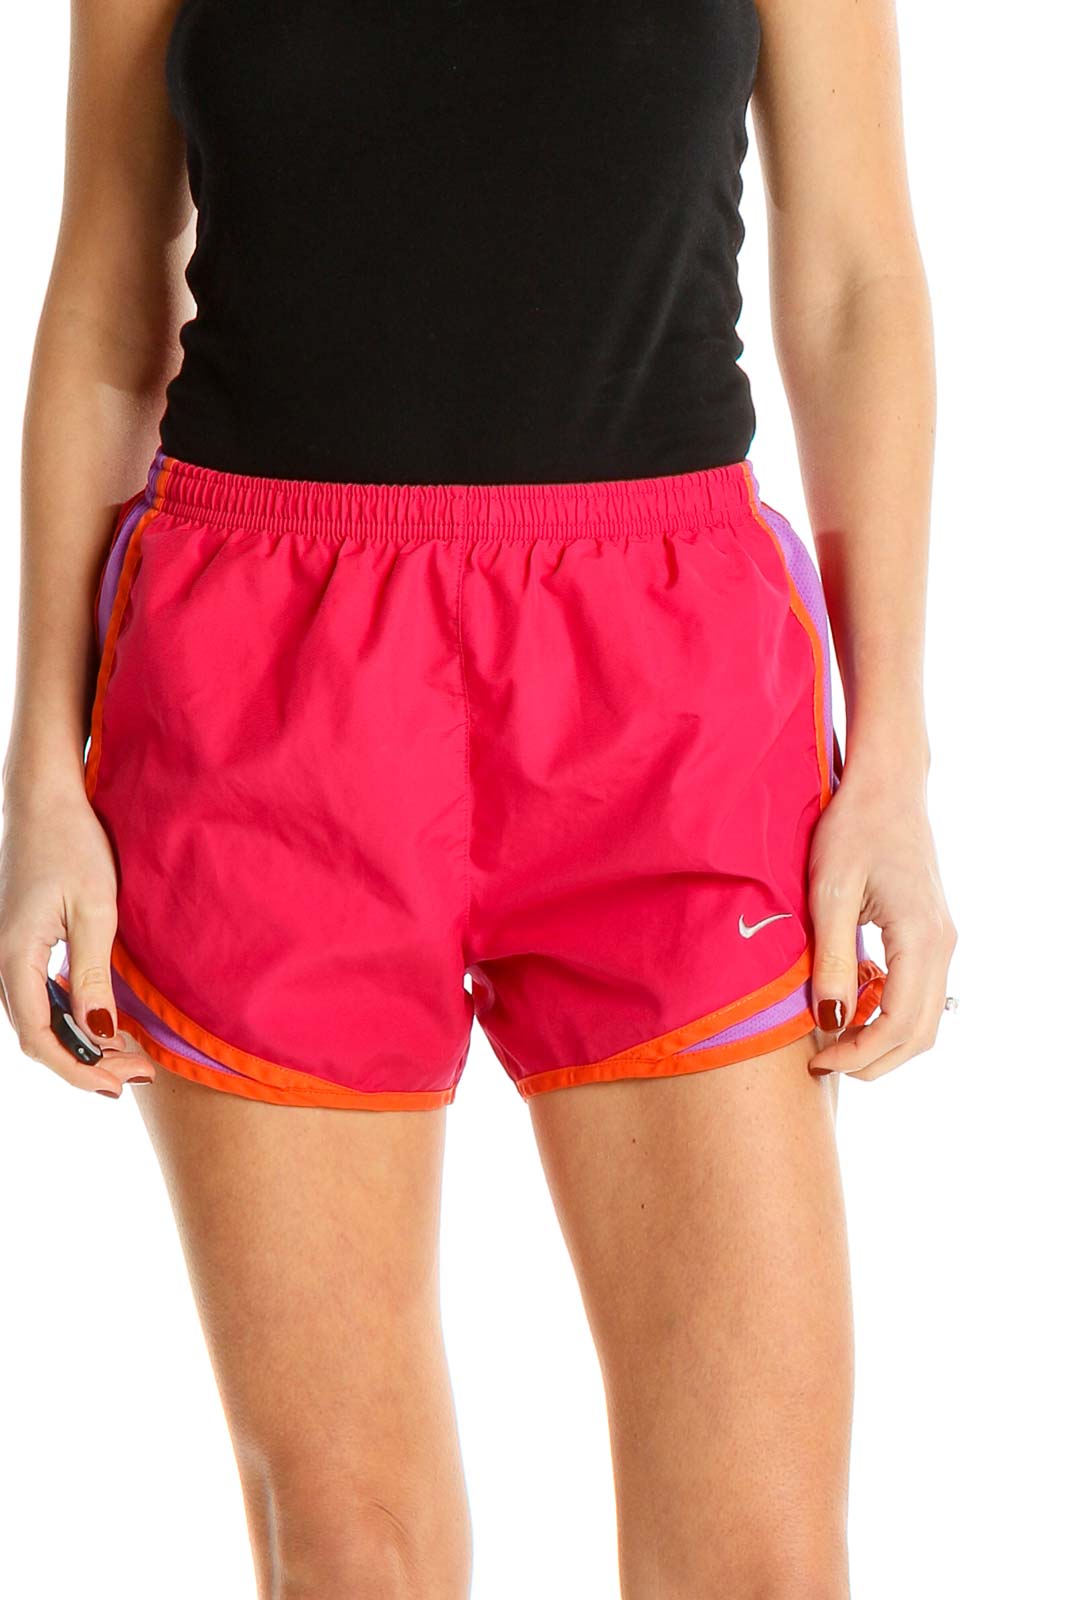 Pink Activewear Shorts Front